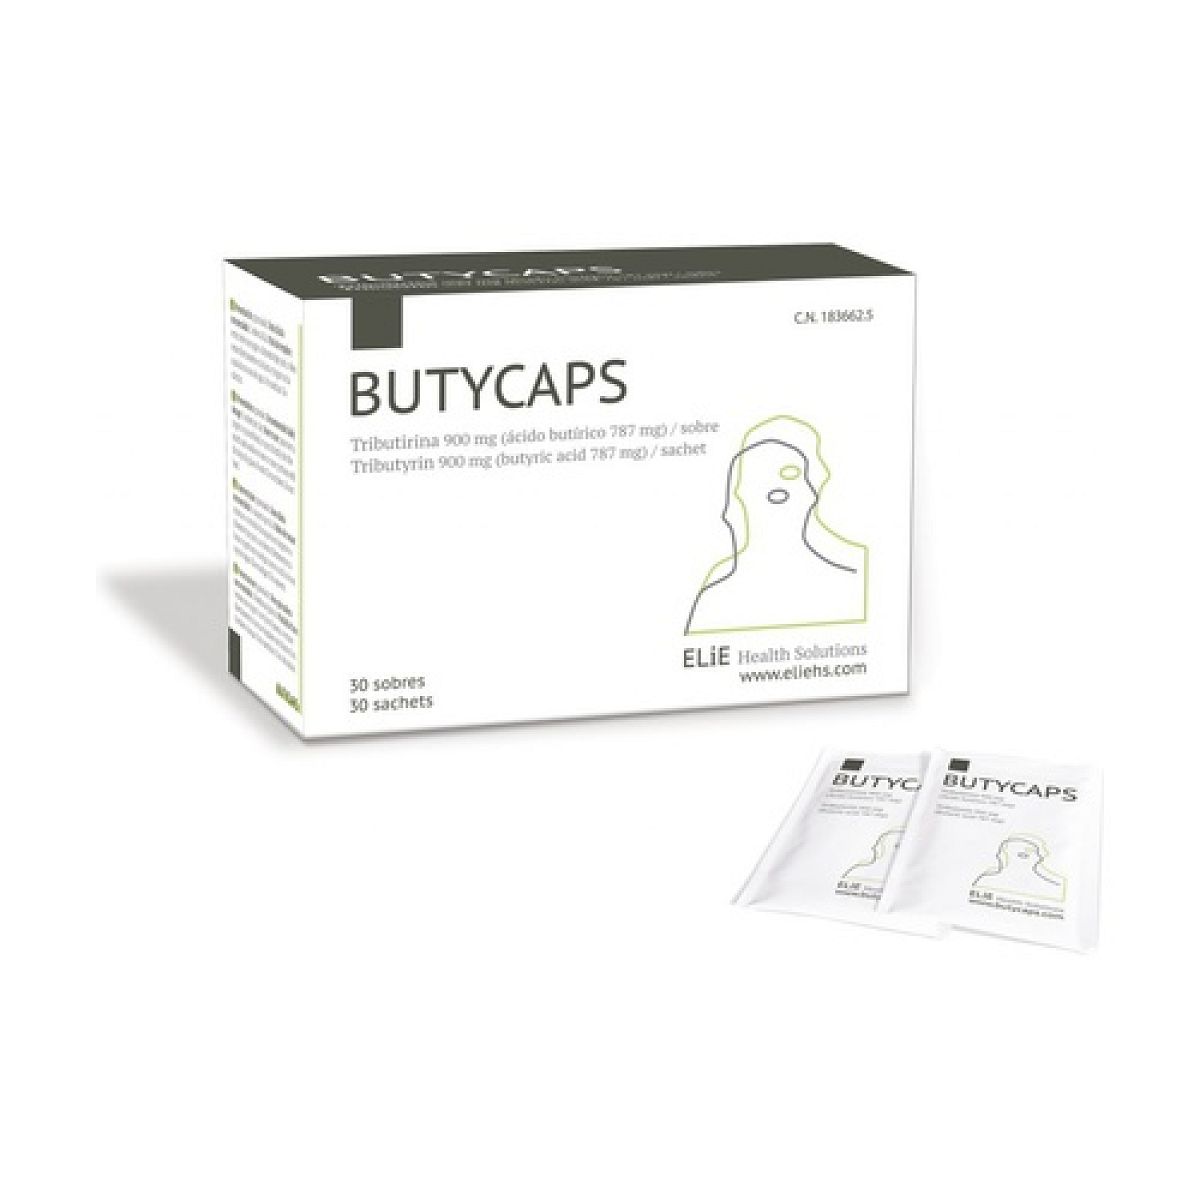 Elie health solution - Butycaps